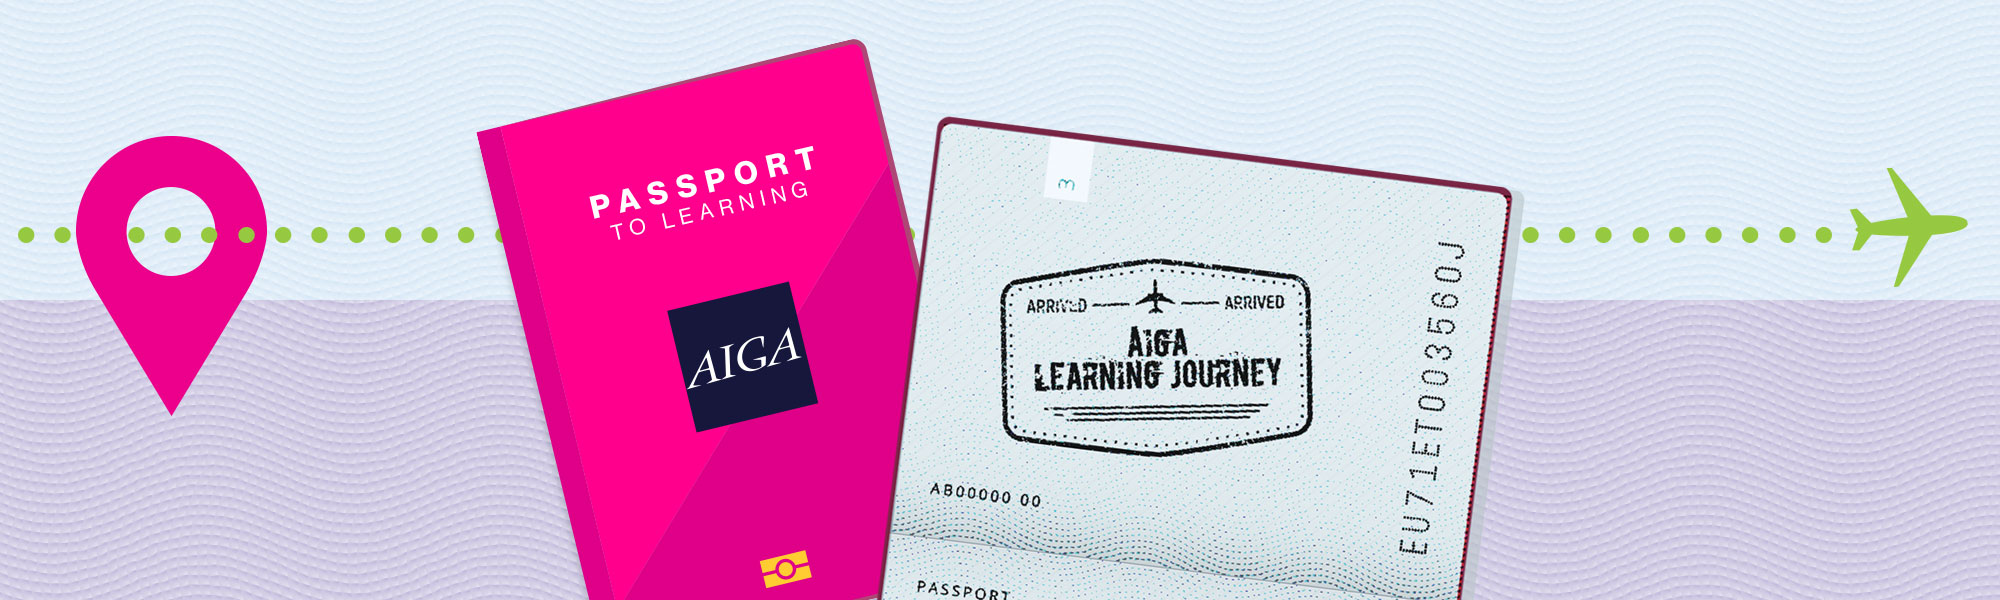 AIGA Learning Journey Passport Image